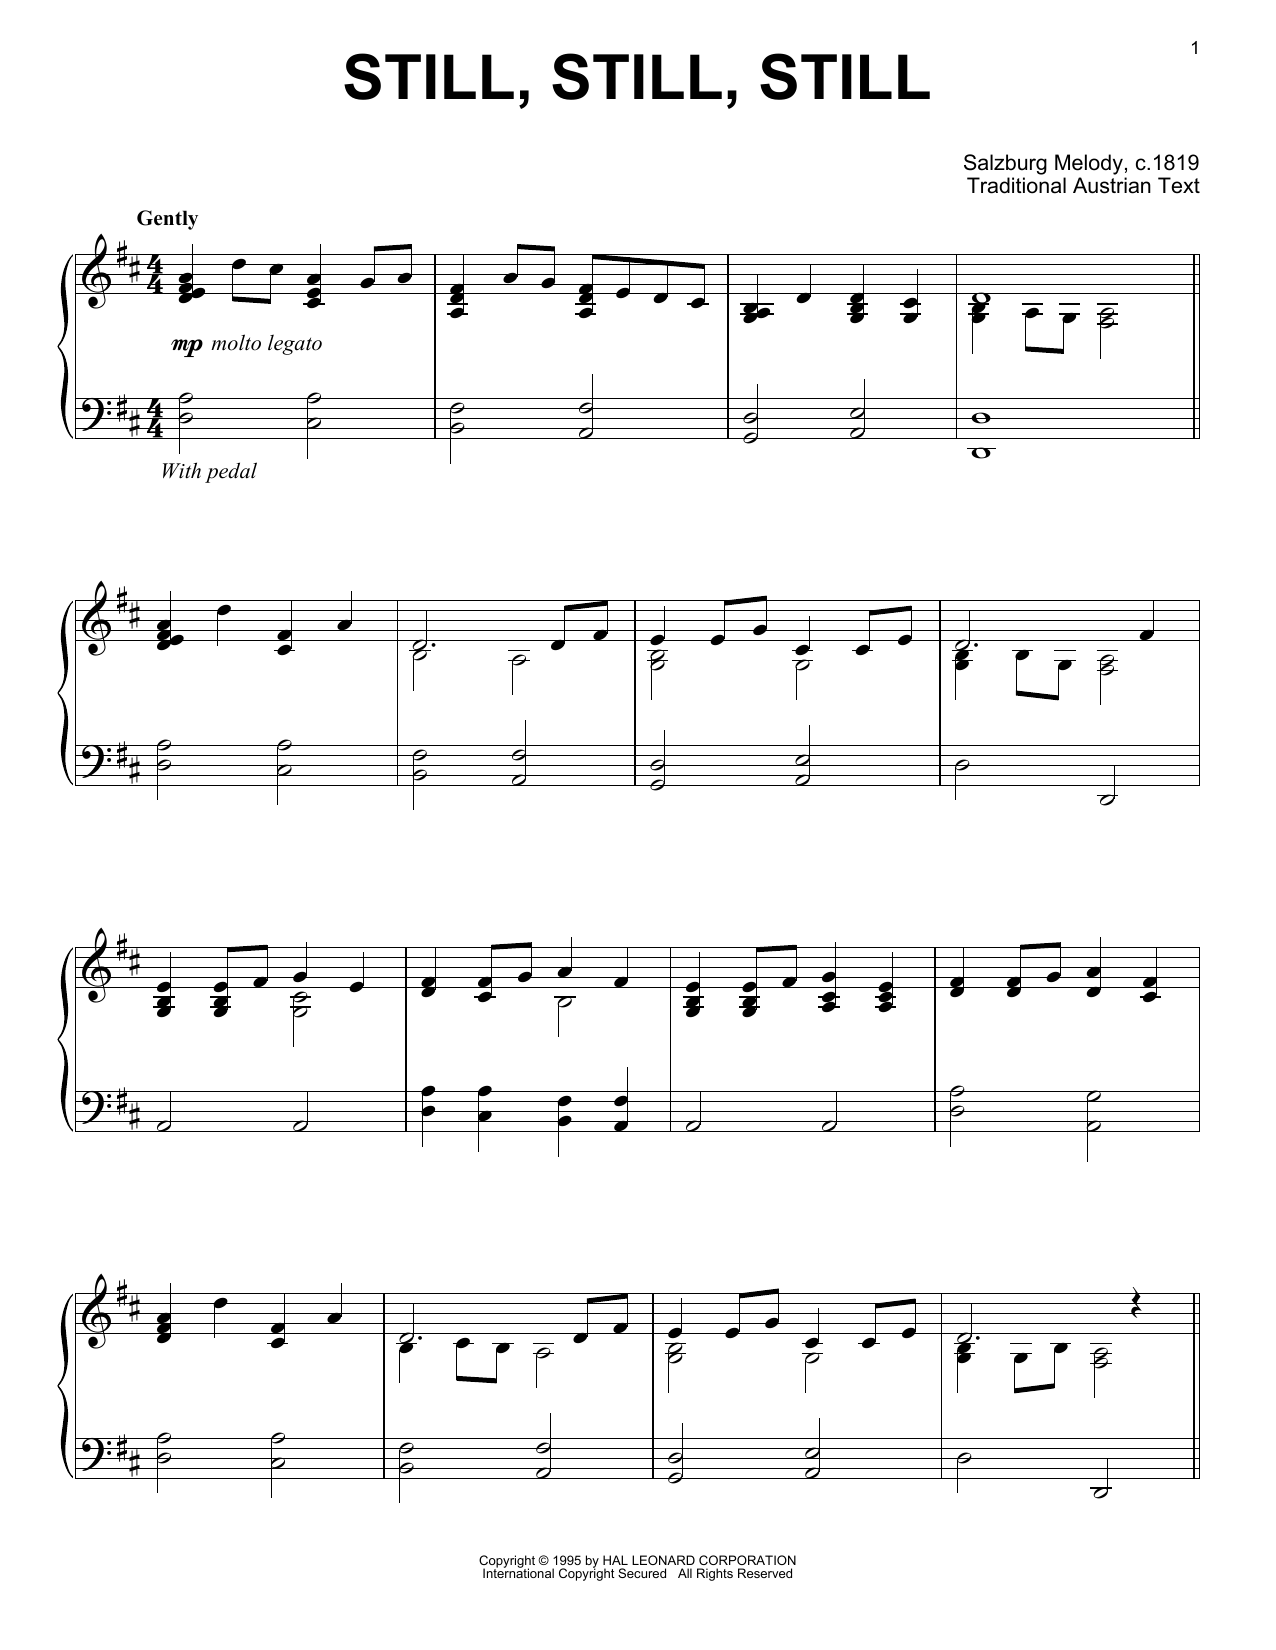 Traditional Austrian Text Still, Still, Still sheet music notes and chords arranged for Cello Solo